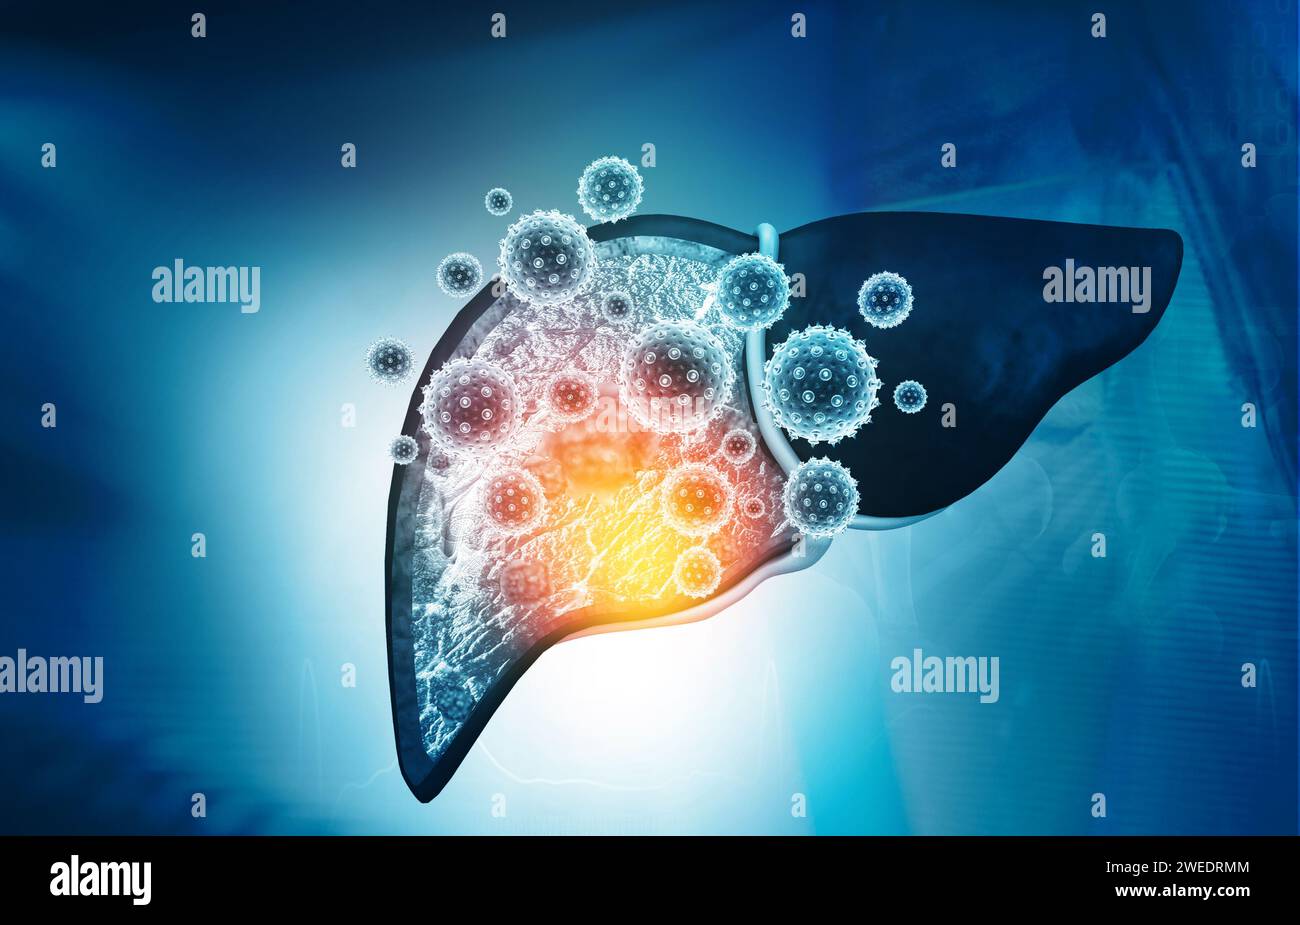 Virus attacks human liver. 3d illustration Stock Photo